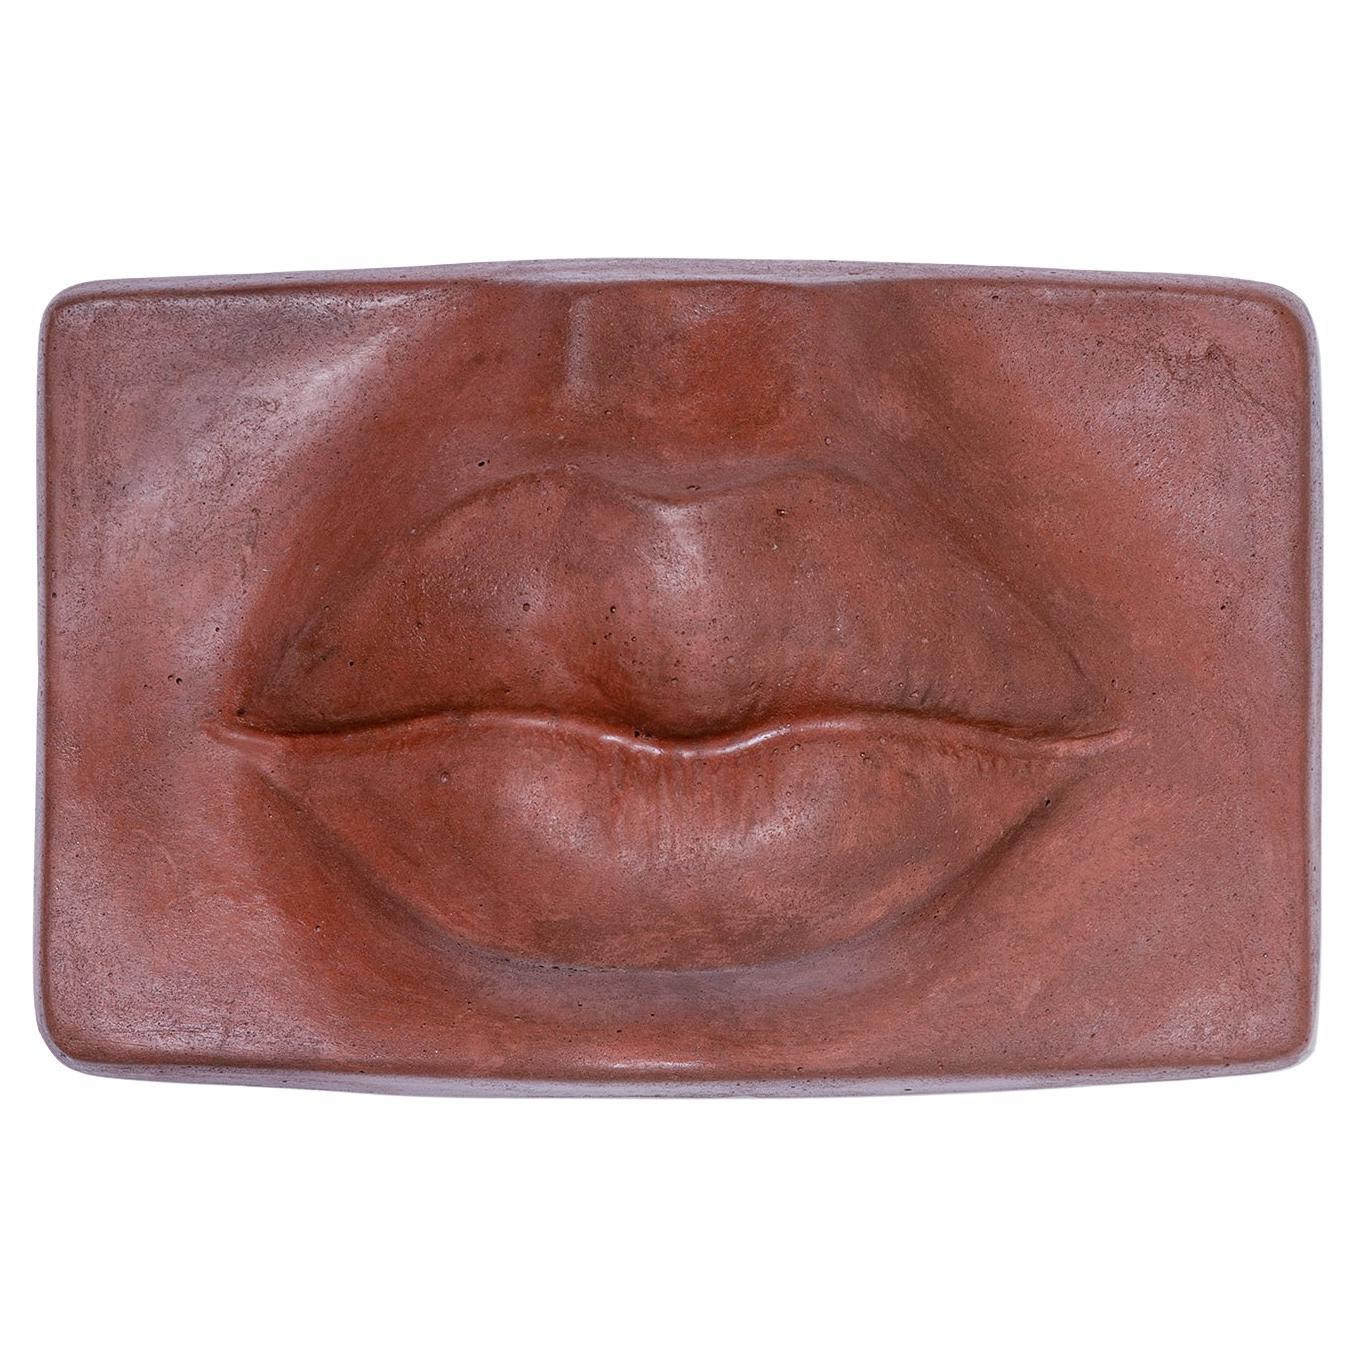 Sculpture des lèvres de Rigel